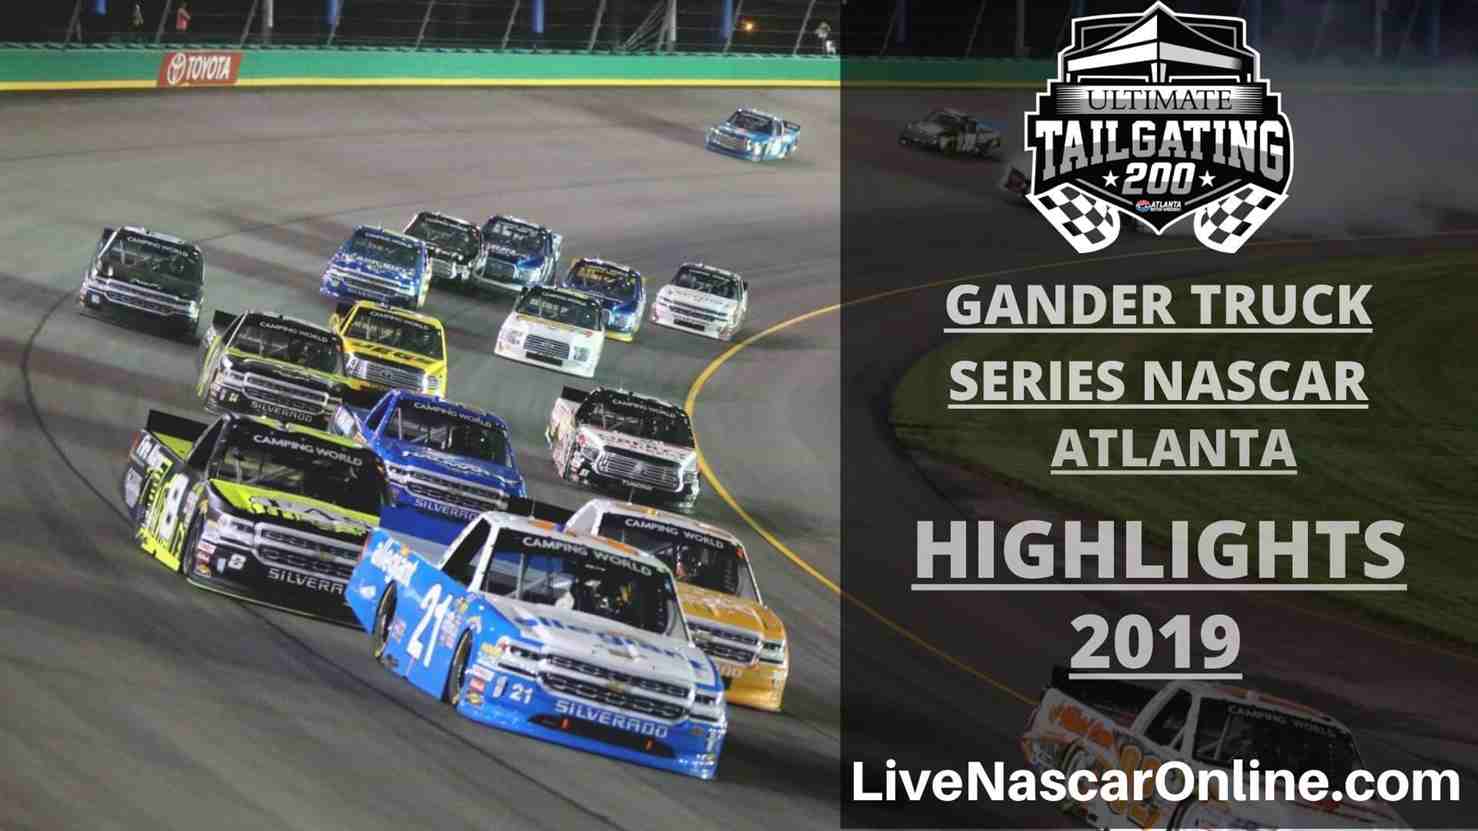 NASCAR Gander Truck Series ULTIMATE TAILGATING 200 Highlights 2019 Online 